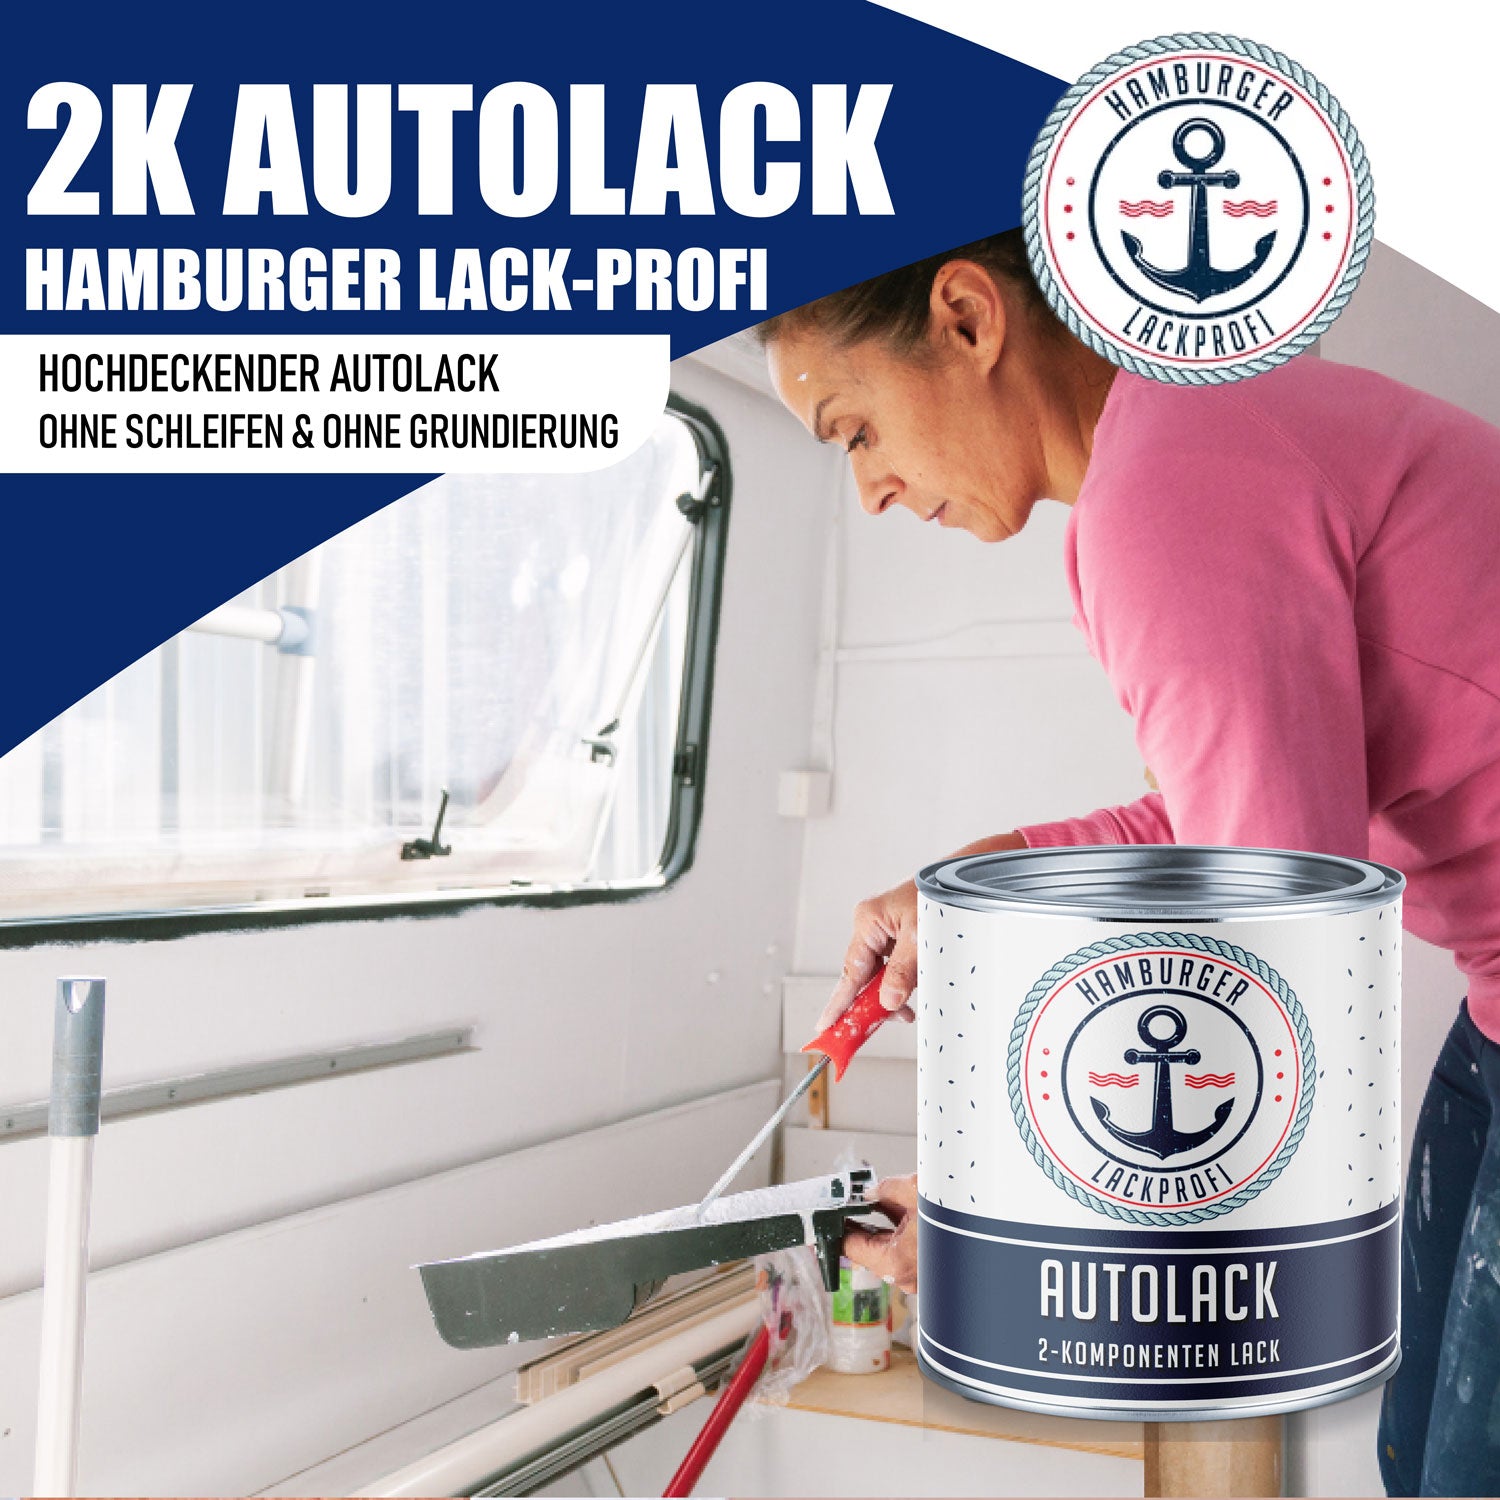 Hamburger Lack-Profi 2K Autolack in Mahagonibraun RAL 8016 mit Lackierset (X300) & Verdünnung (1 L) - 30% Sparangebot